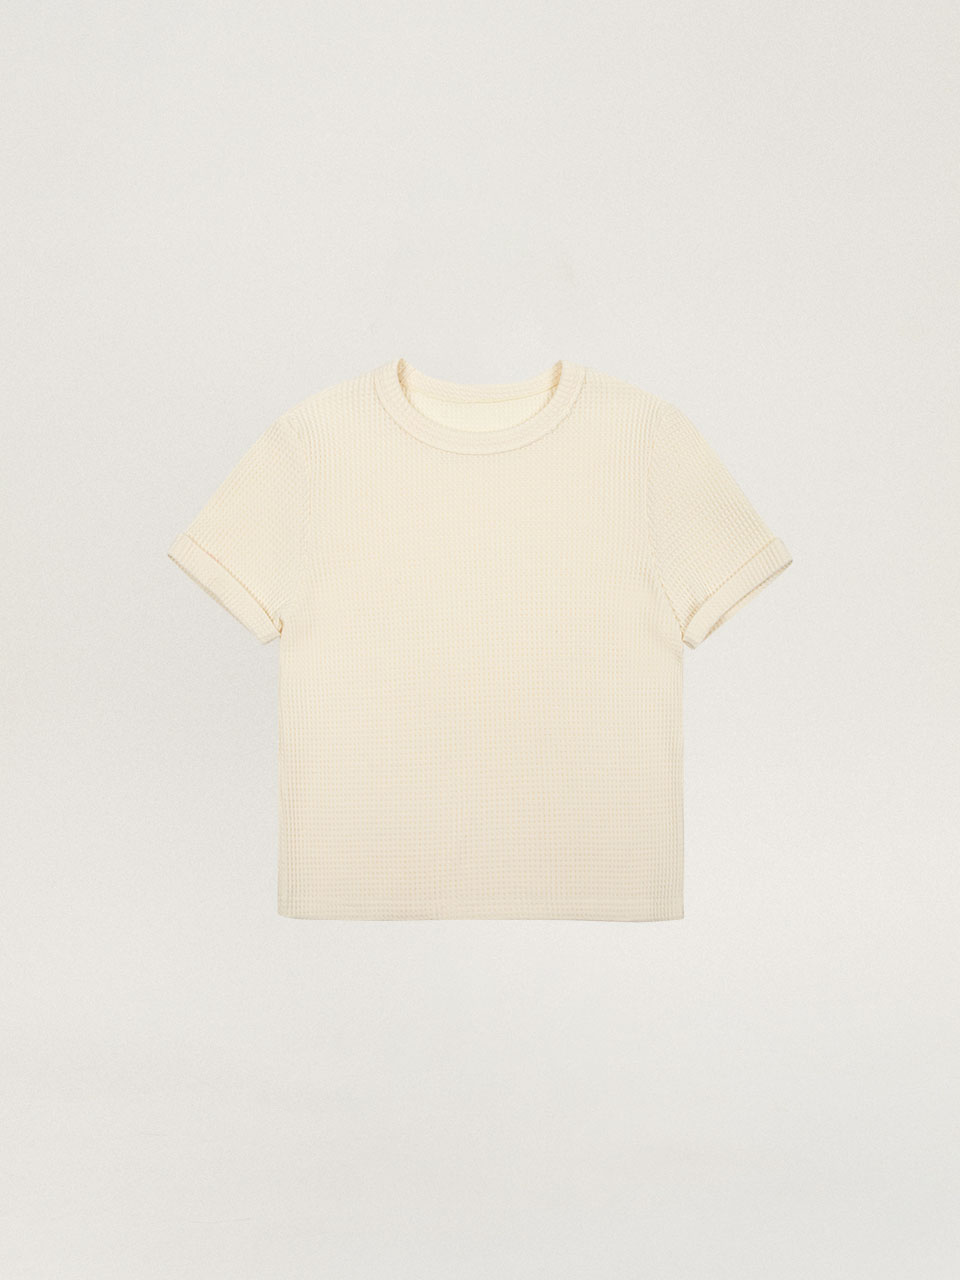 Waffle Half T-Shirt_4color (White,Light Yellow : 05/31 예약배송)